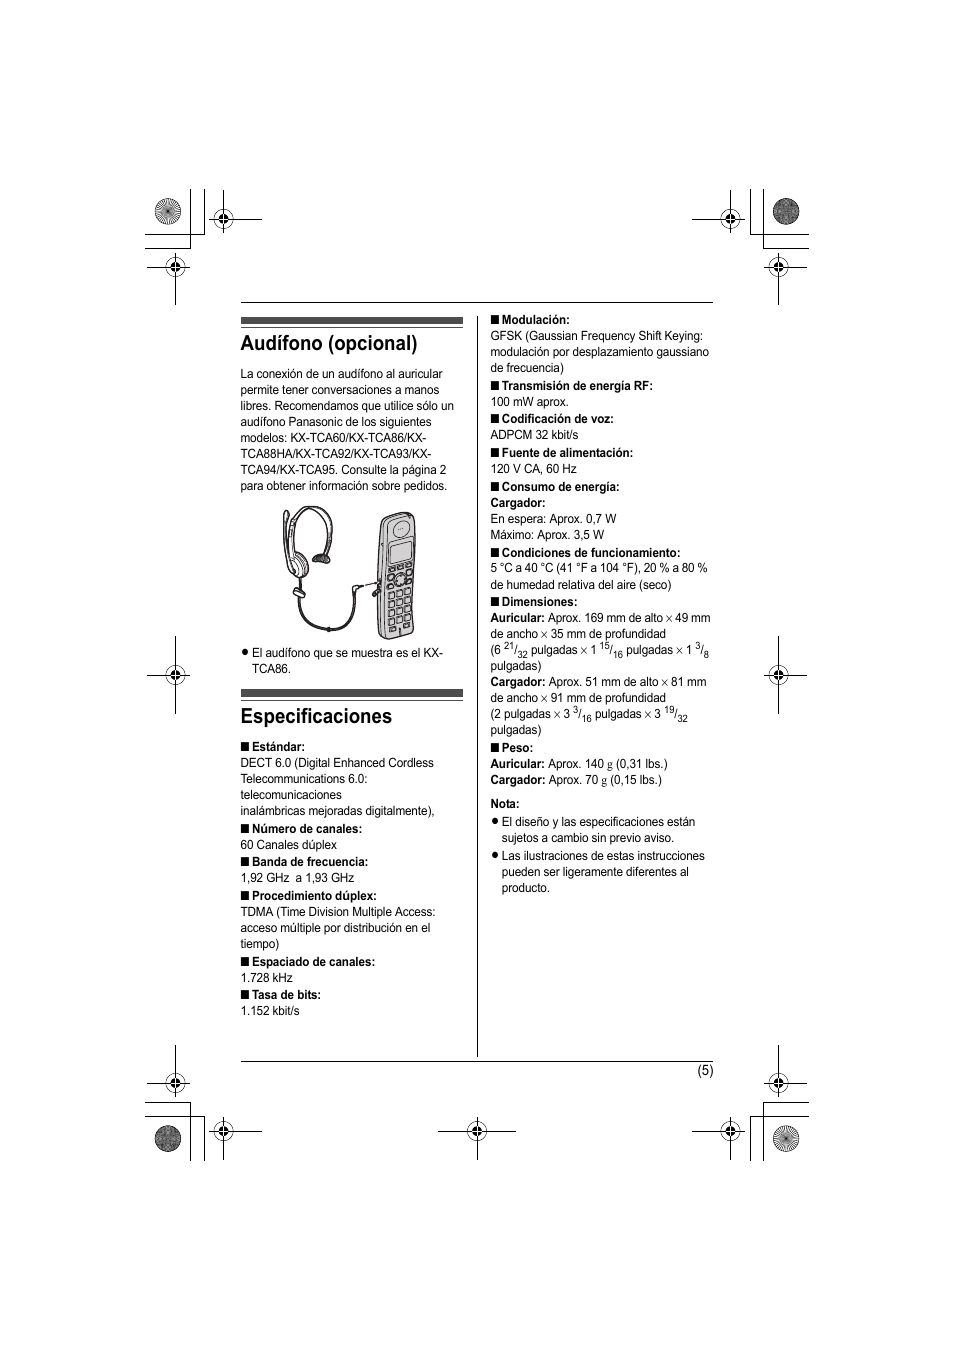 Audífono (opcional), Especificaciones | Panasonic KX-TGA101S User